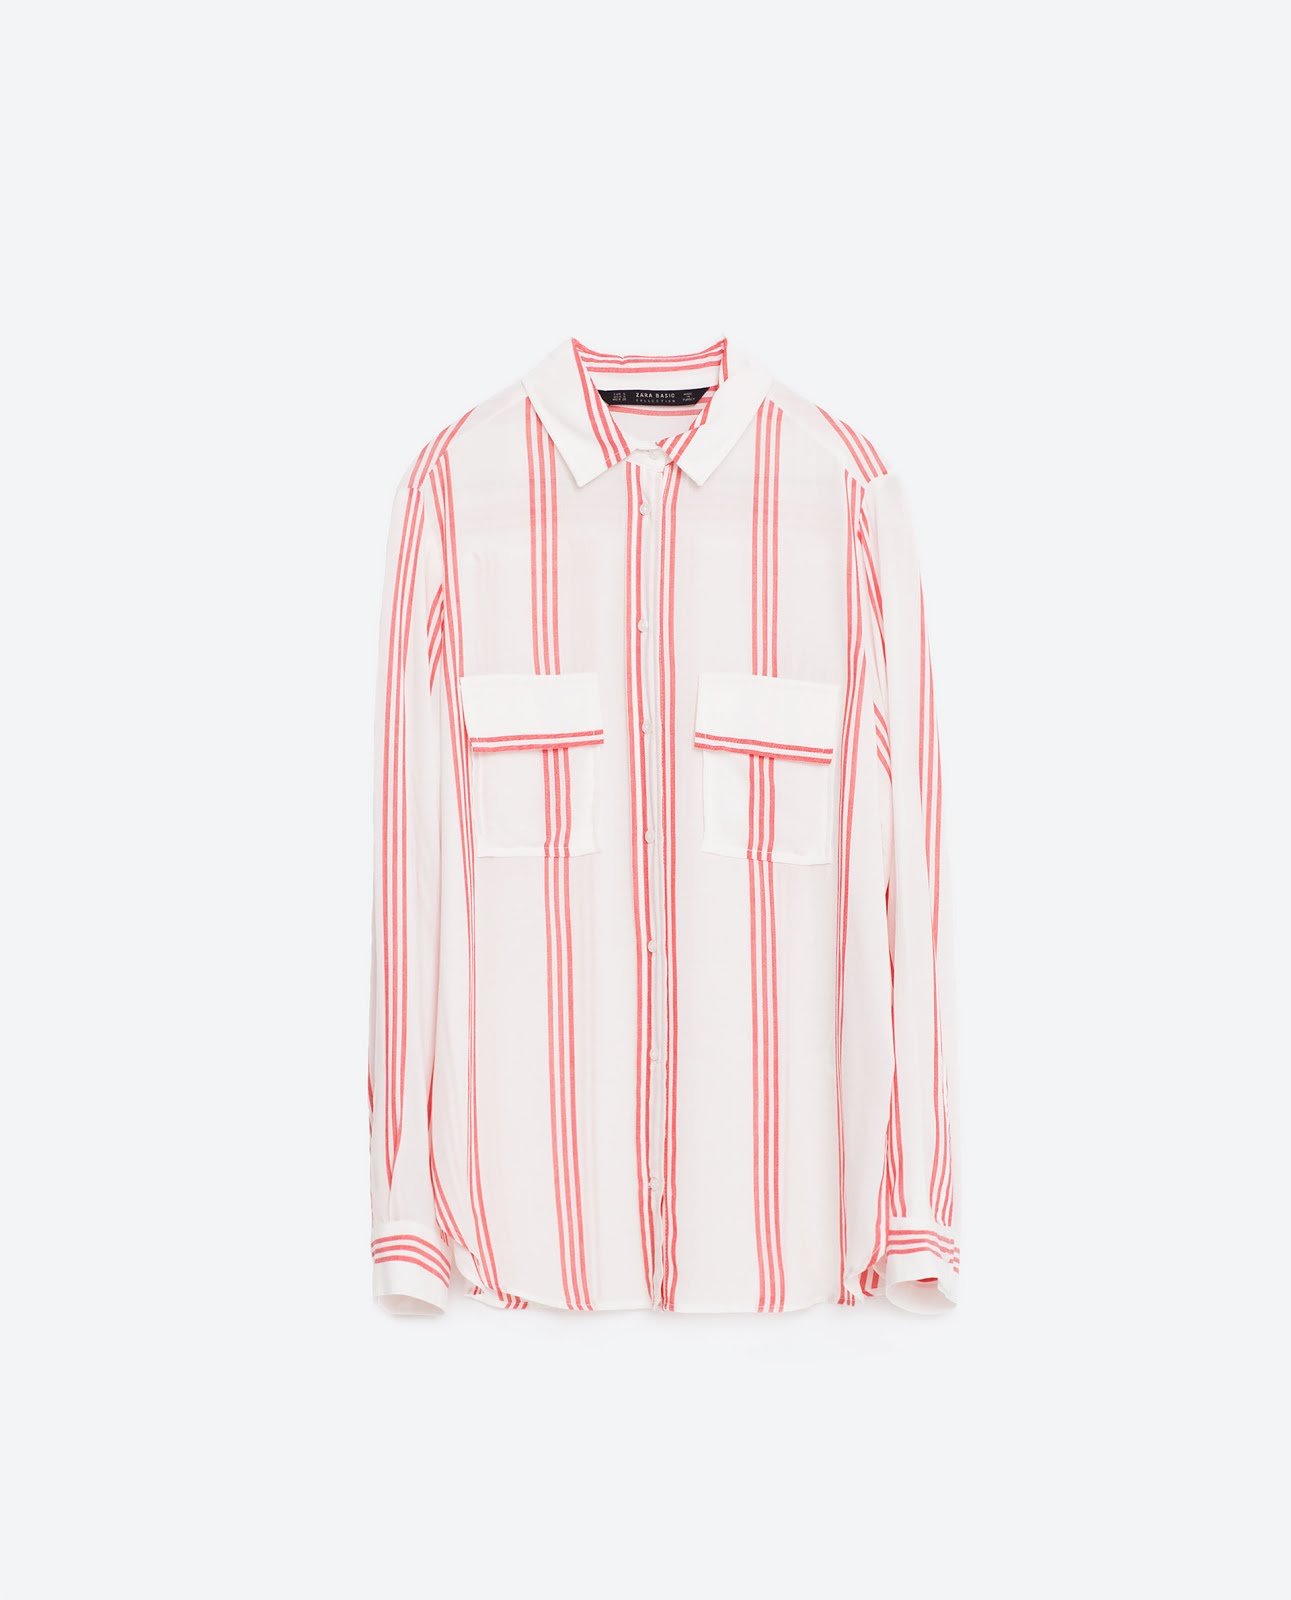 Zara Stripe Shirt with Flap Pocket in WhitePink.jpg